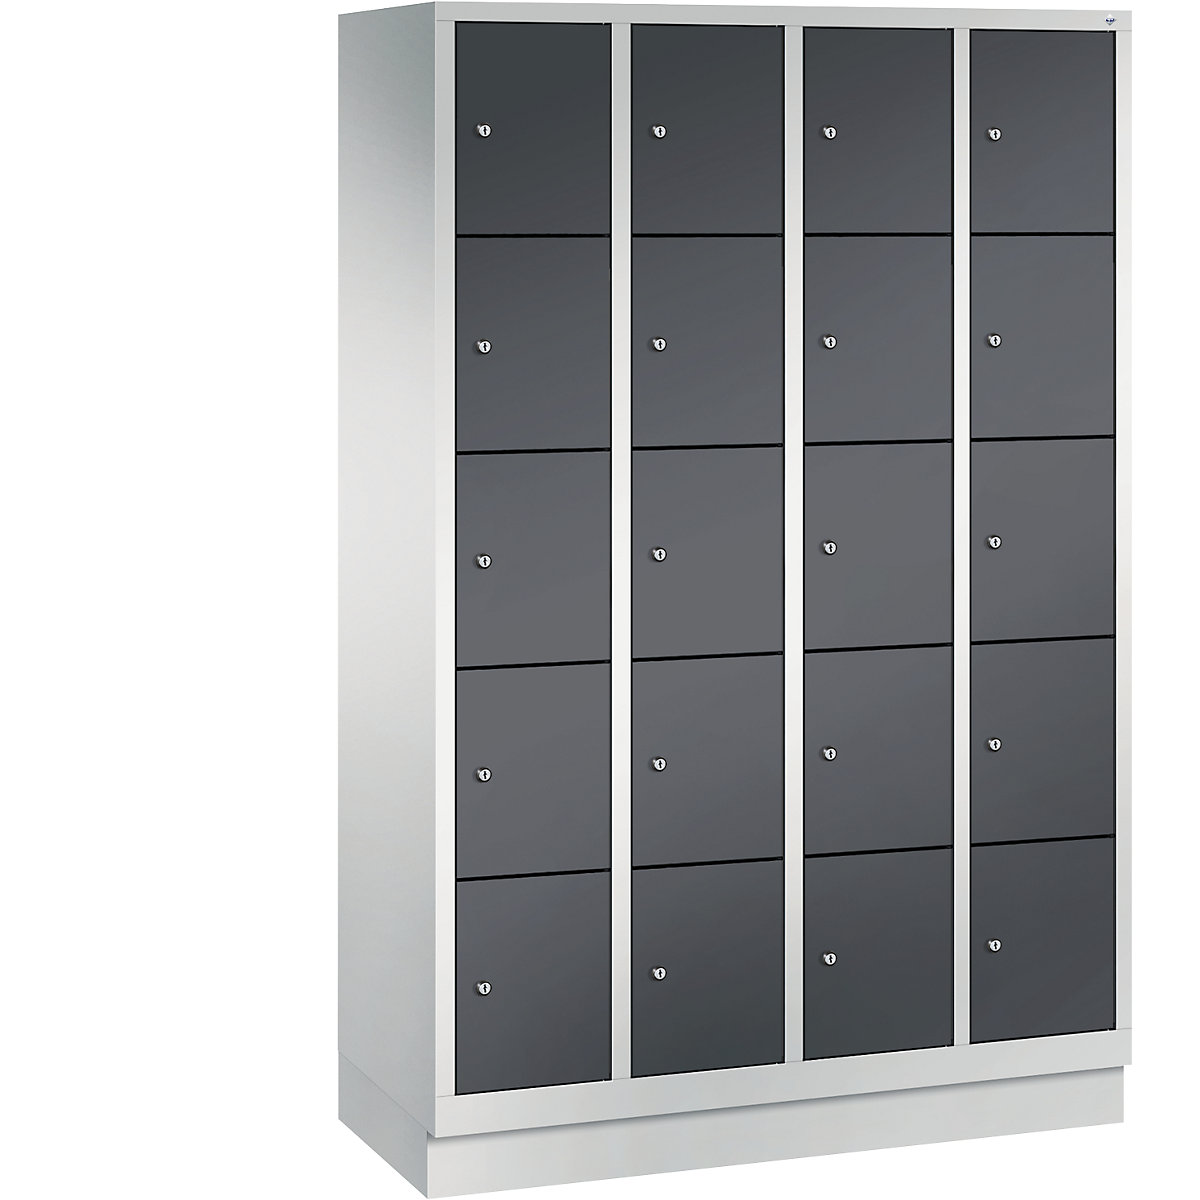 C+P – Armario de compartimentos CLASSIC con zócalo, 4 módulos, cada uno con 5 compartimentos, anchura de módulo 300 mm, gris luminoso / gris negruzco